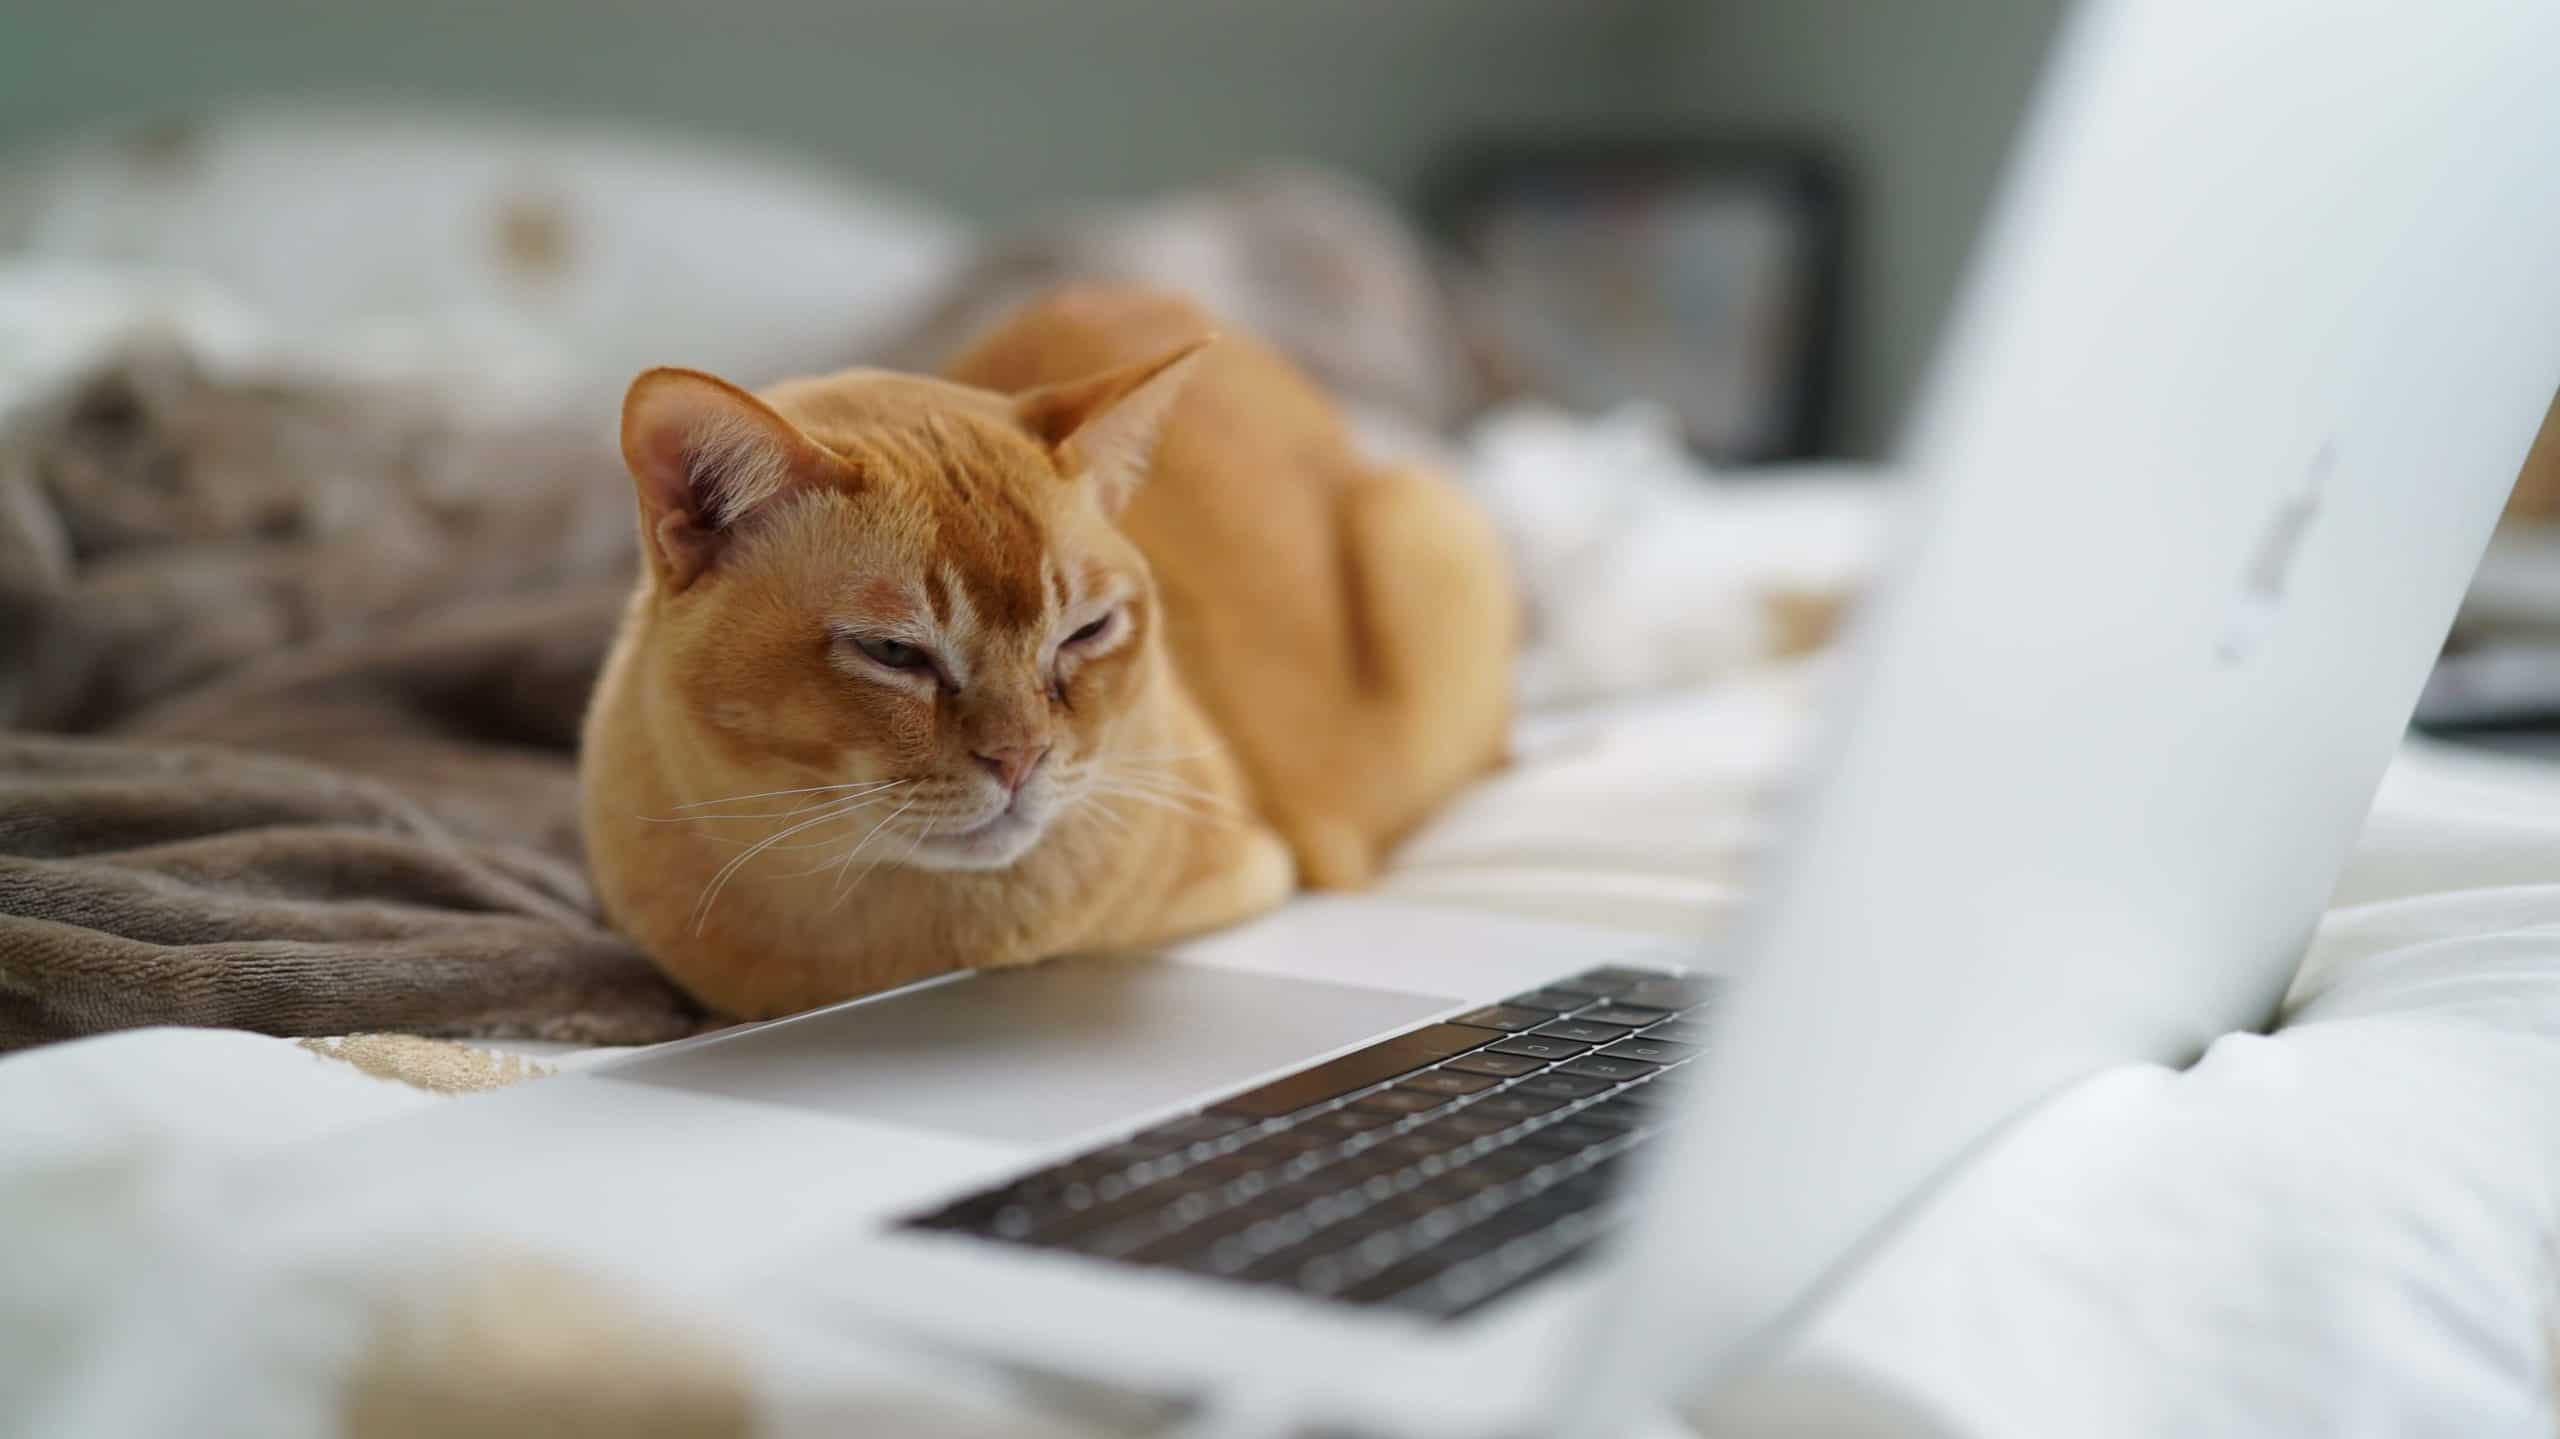 A cat sitting near a laptop